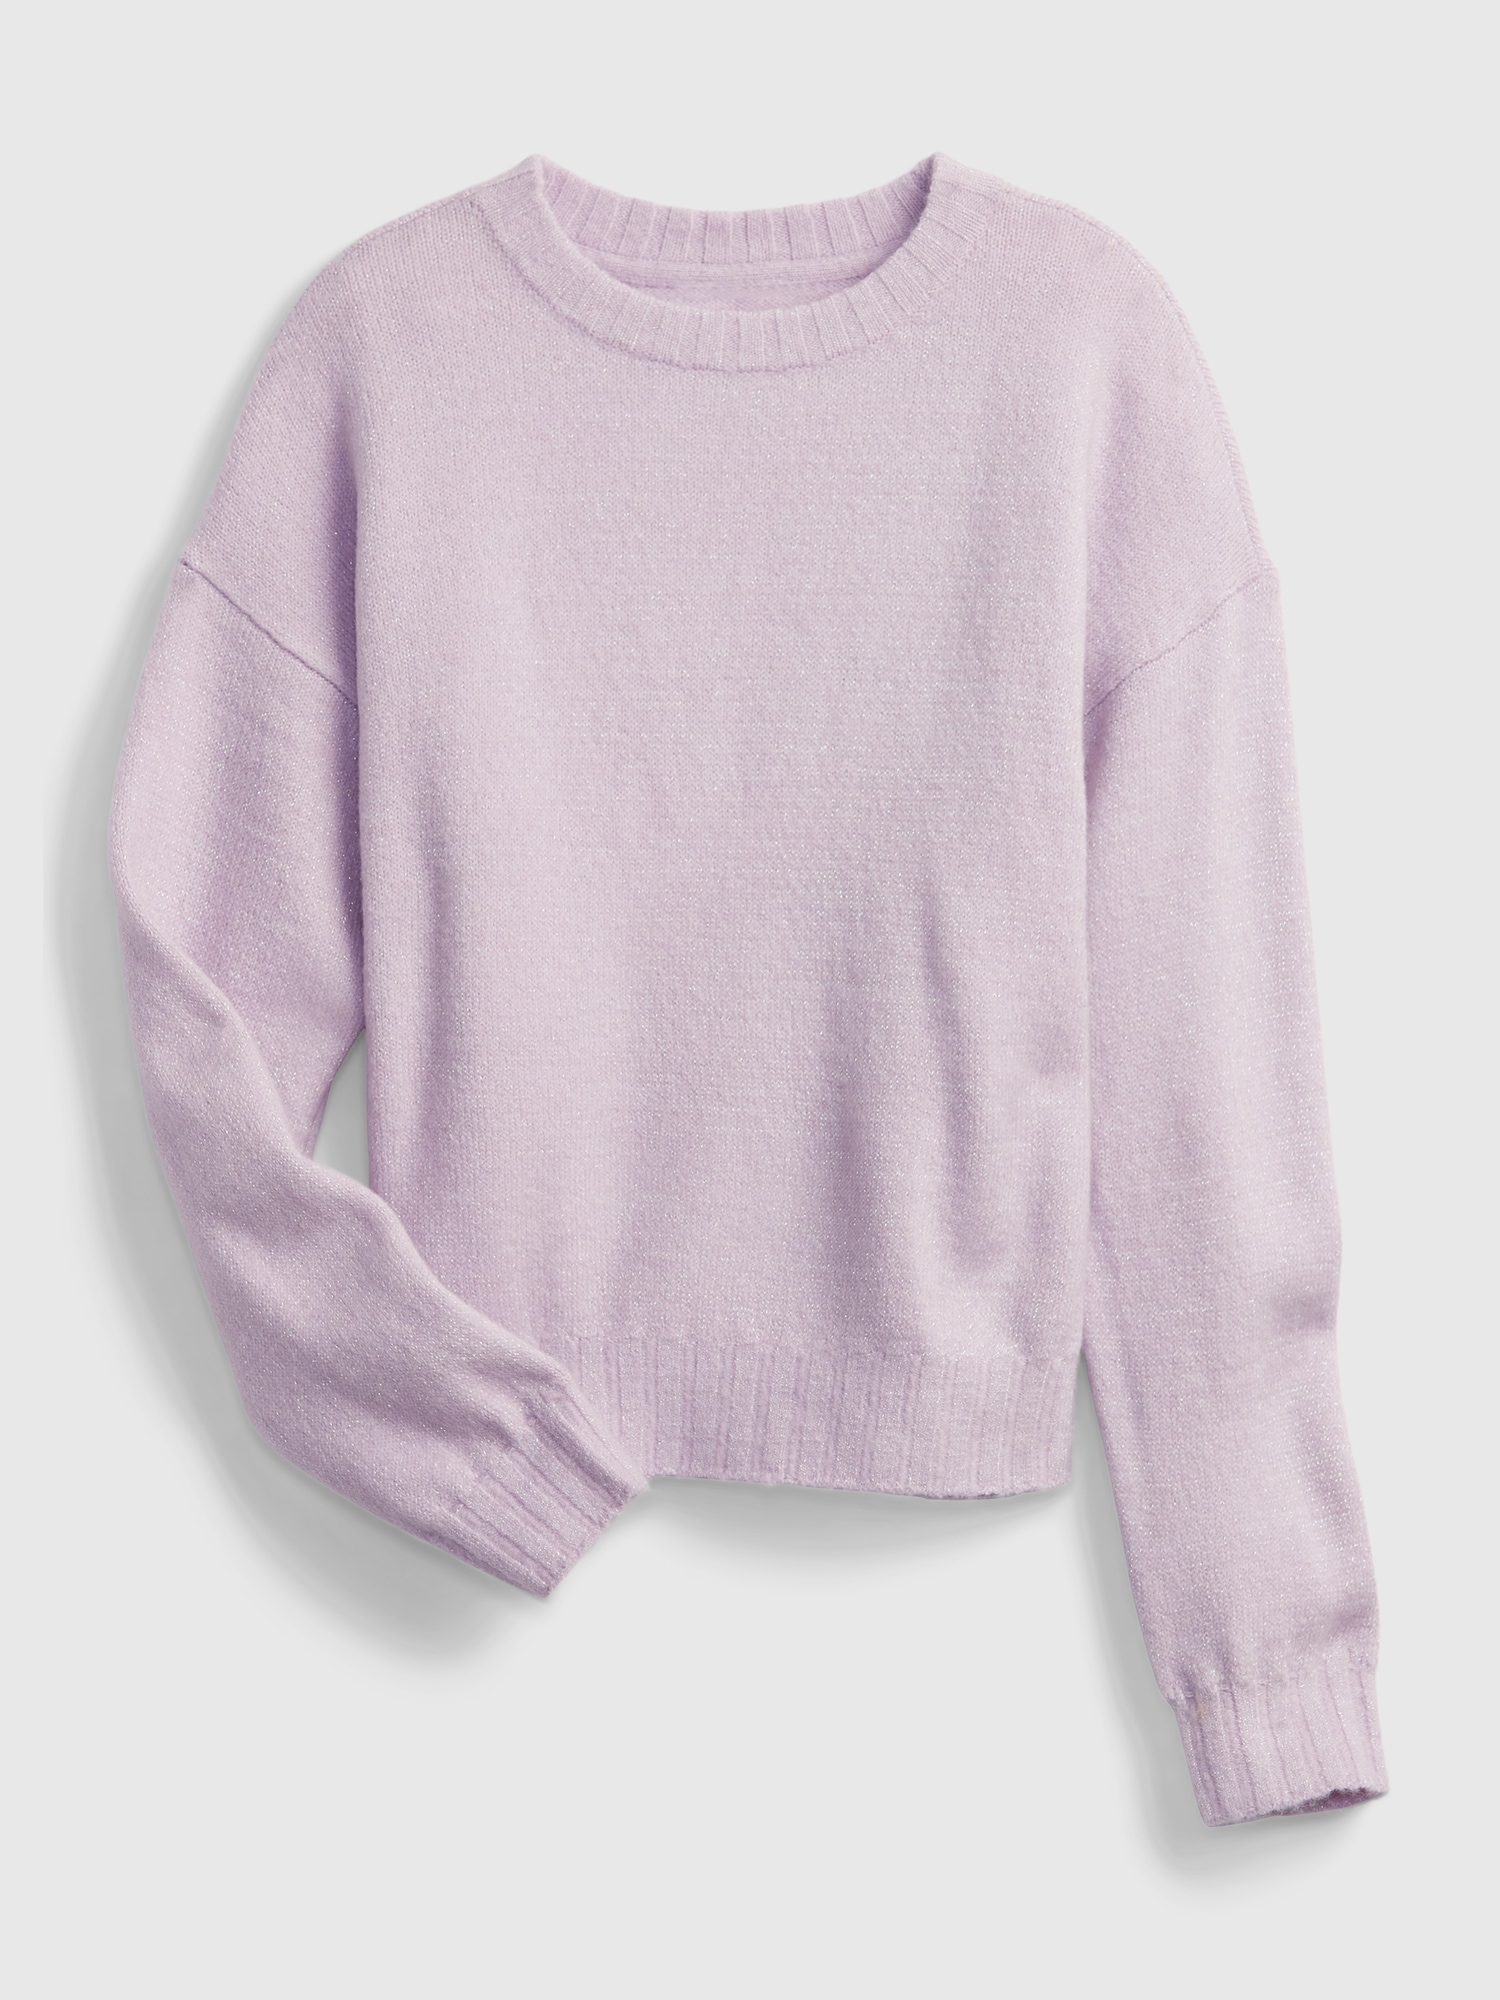 Gap Kids Crewneck Sweater purple. 1